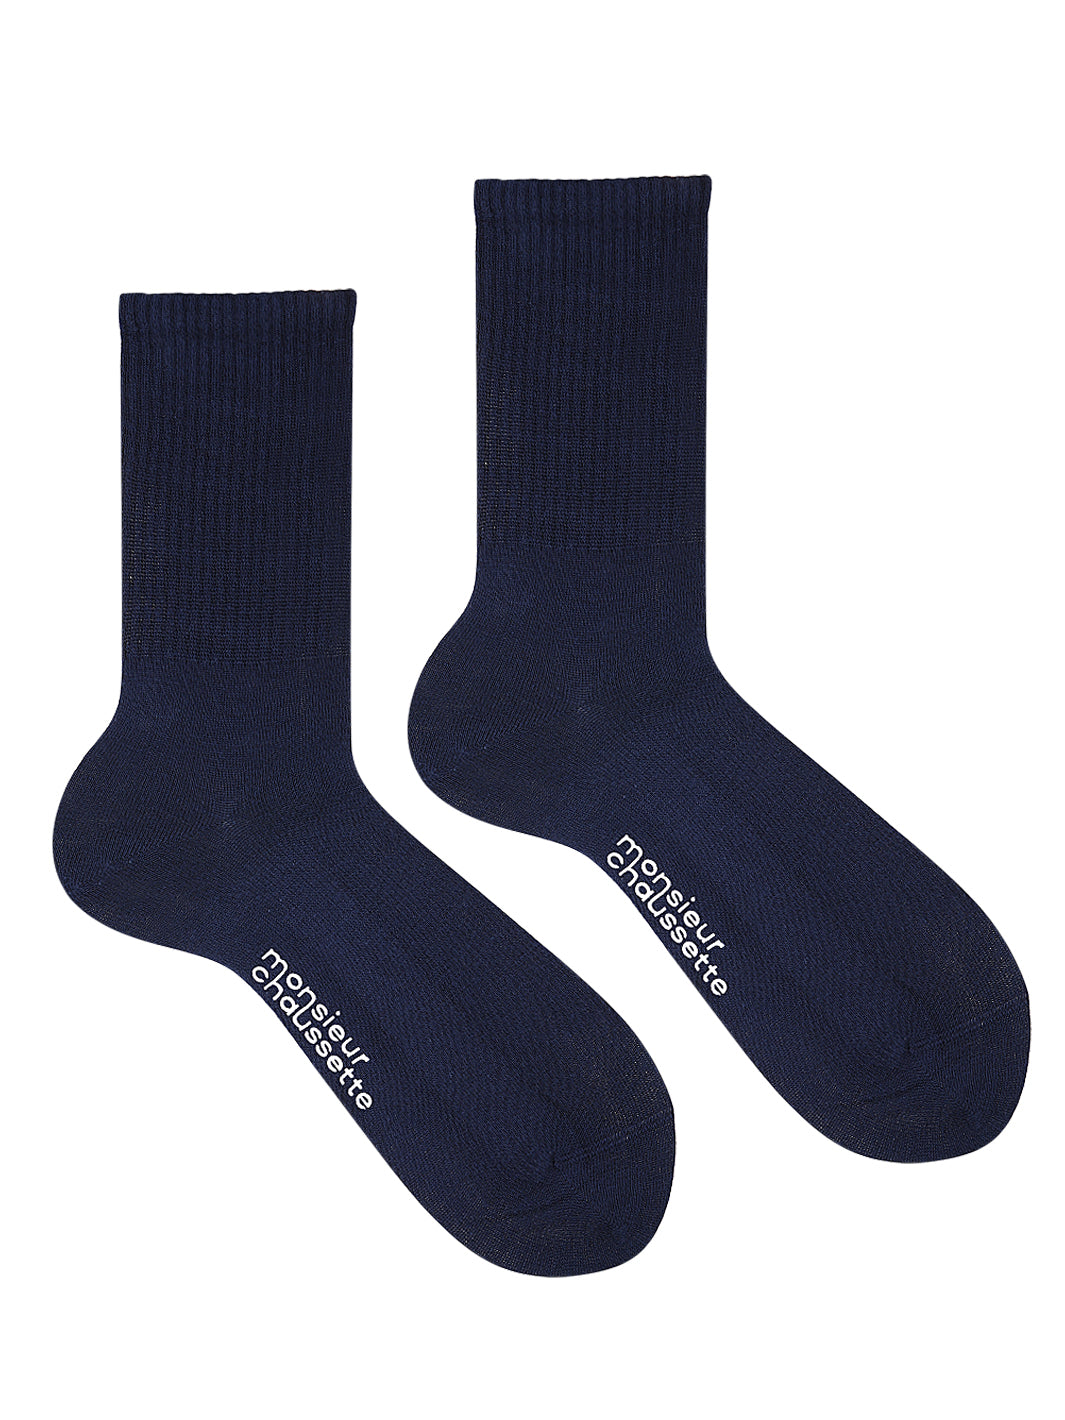 Unicolor-Cloudy Oxford Blue Long Socks